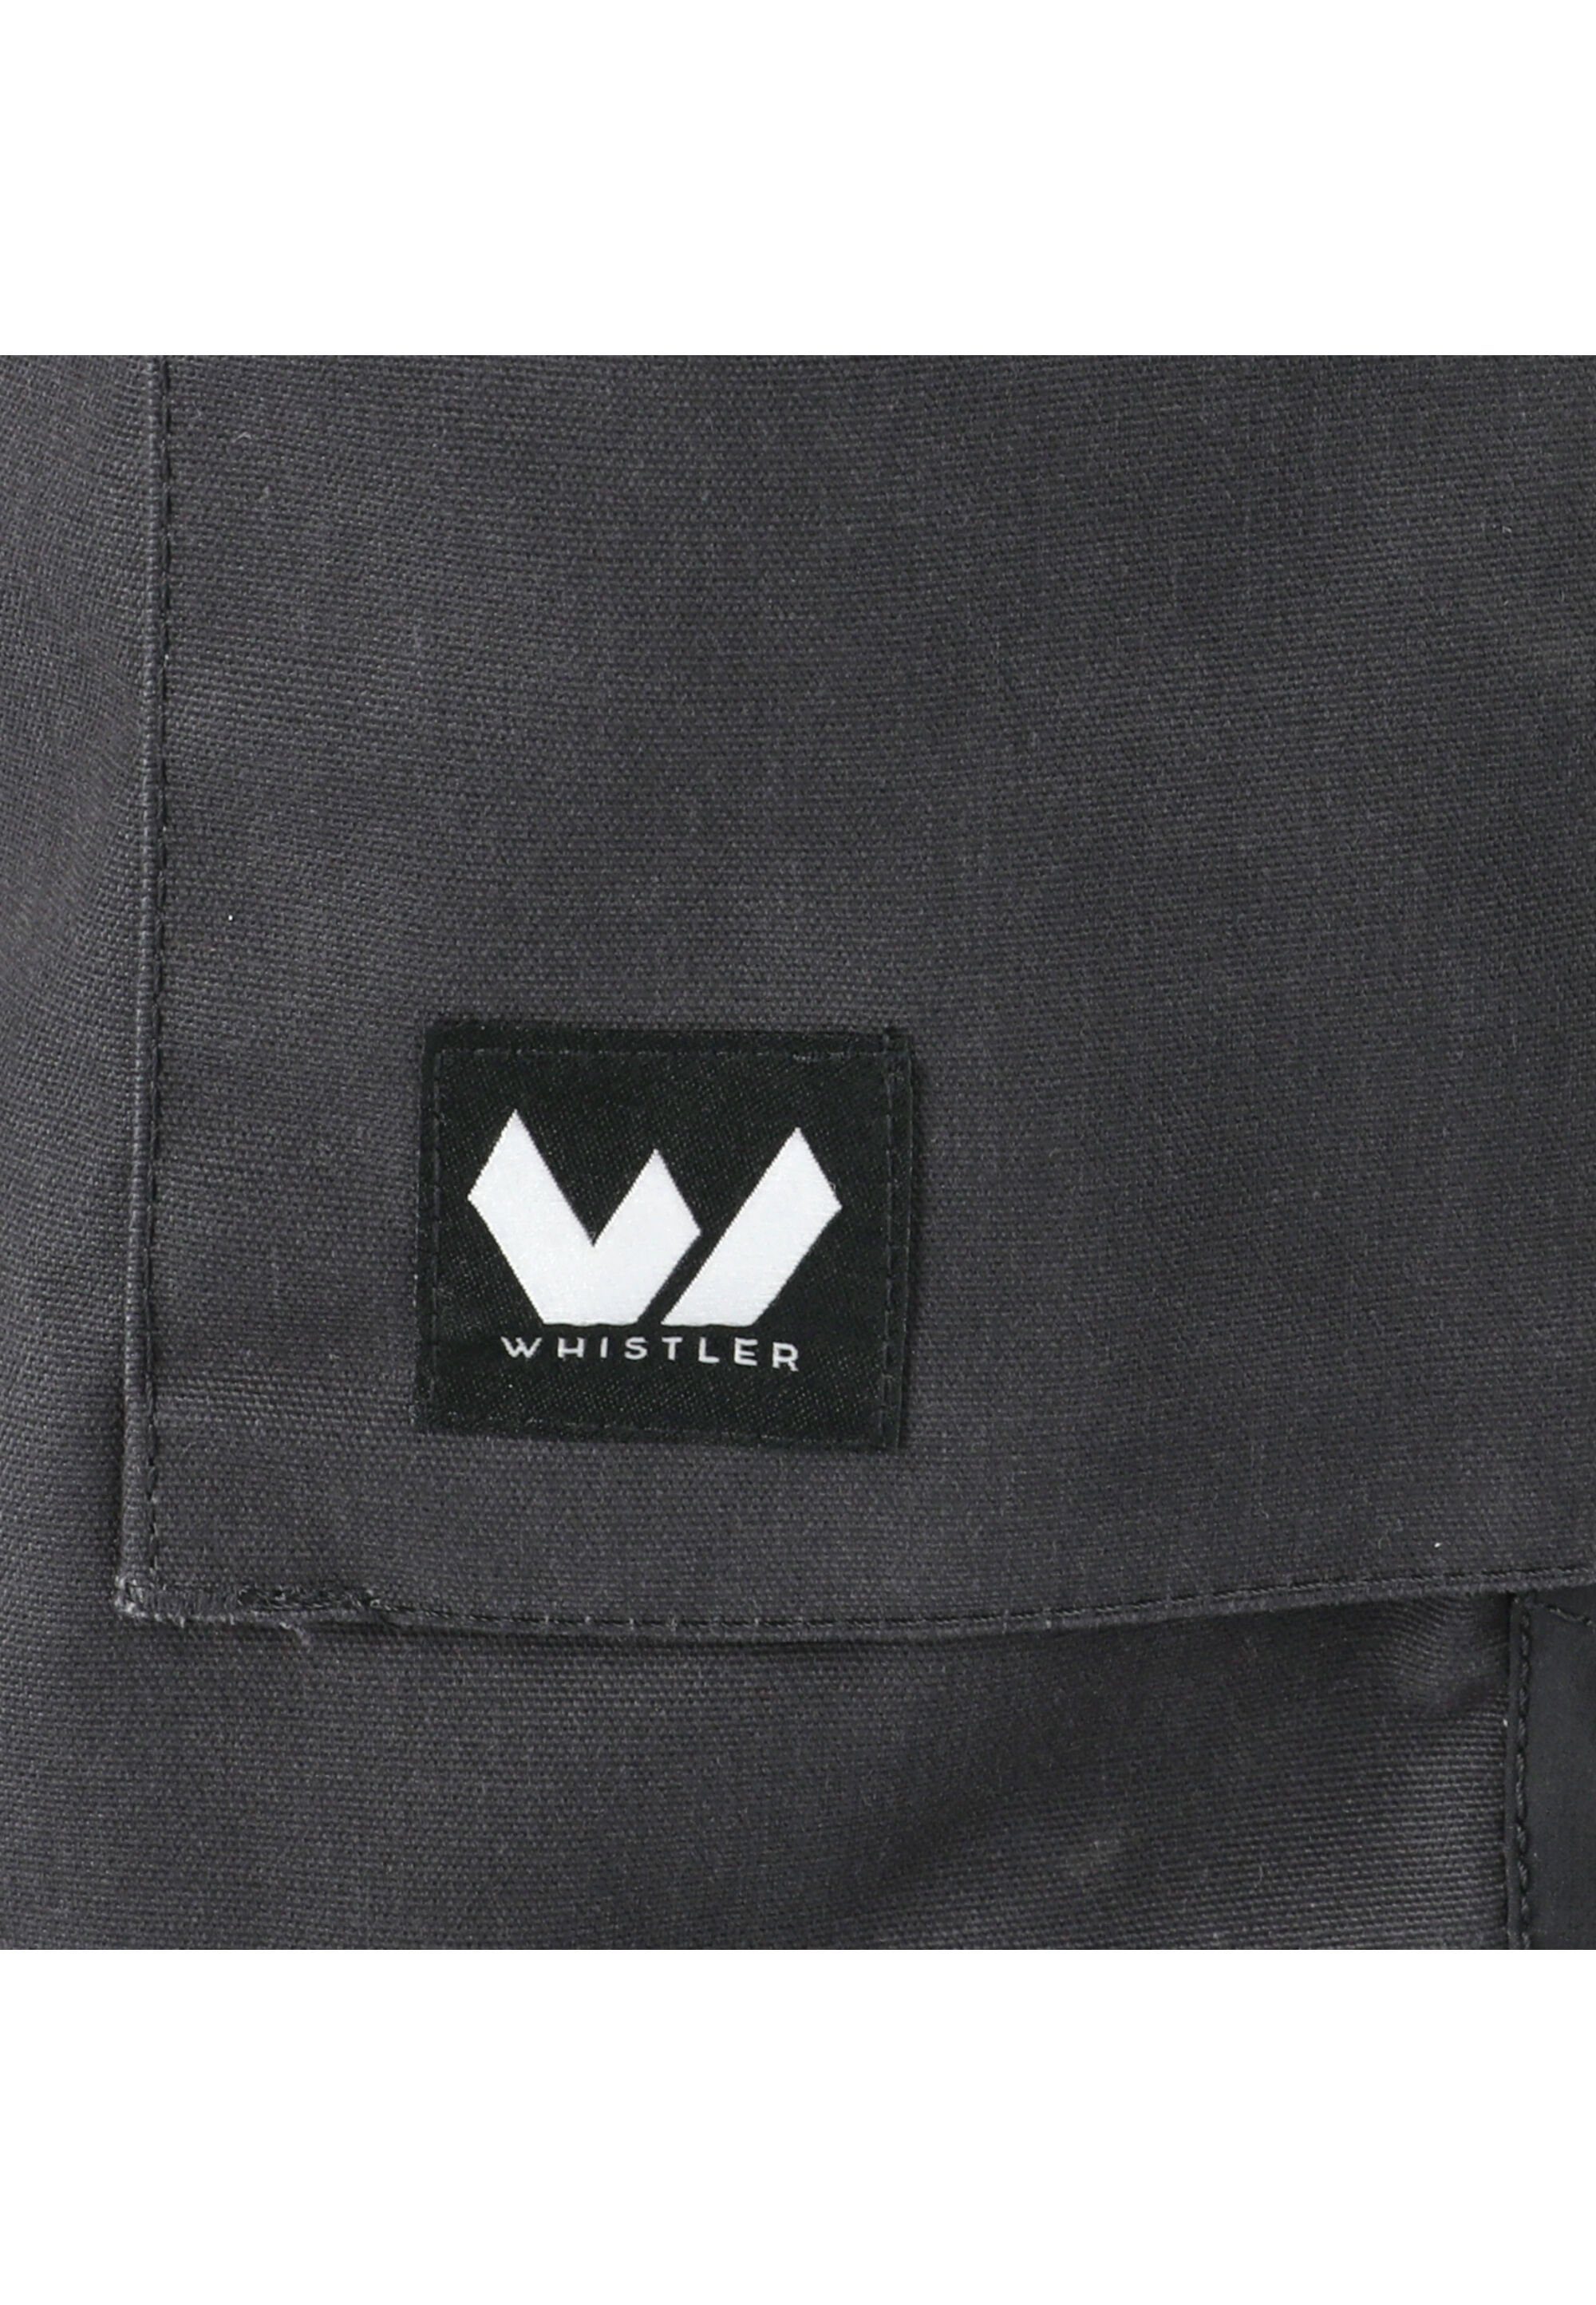 WHISTLER dunkelgrau-schwarz mit ROMMY Materialmix Shorts atmungsaktivem